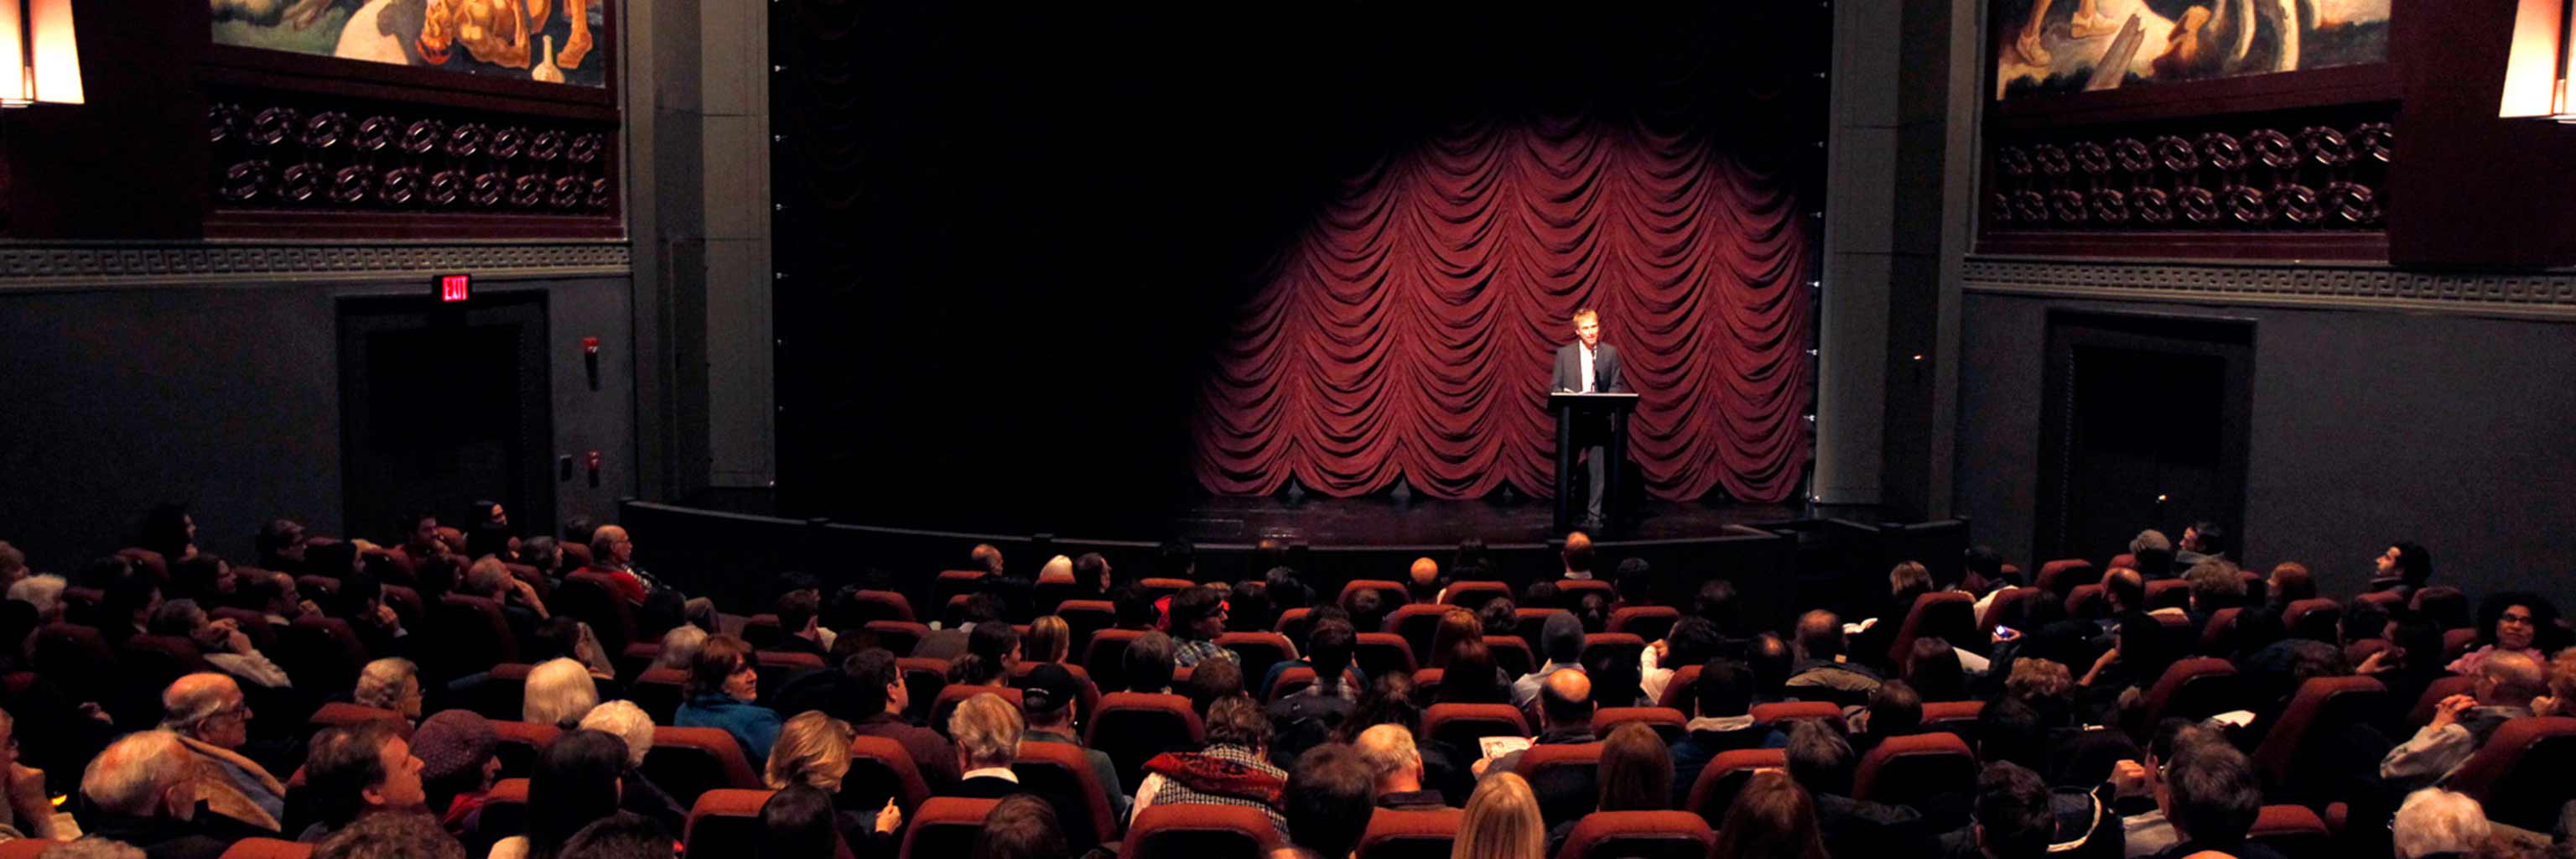 IU Cinema with people seated